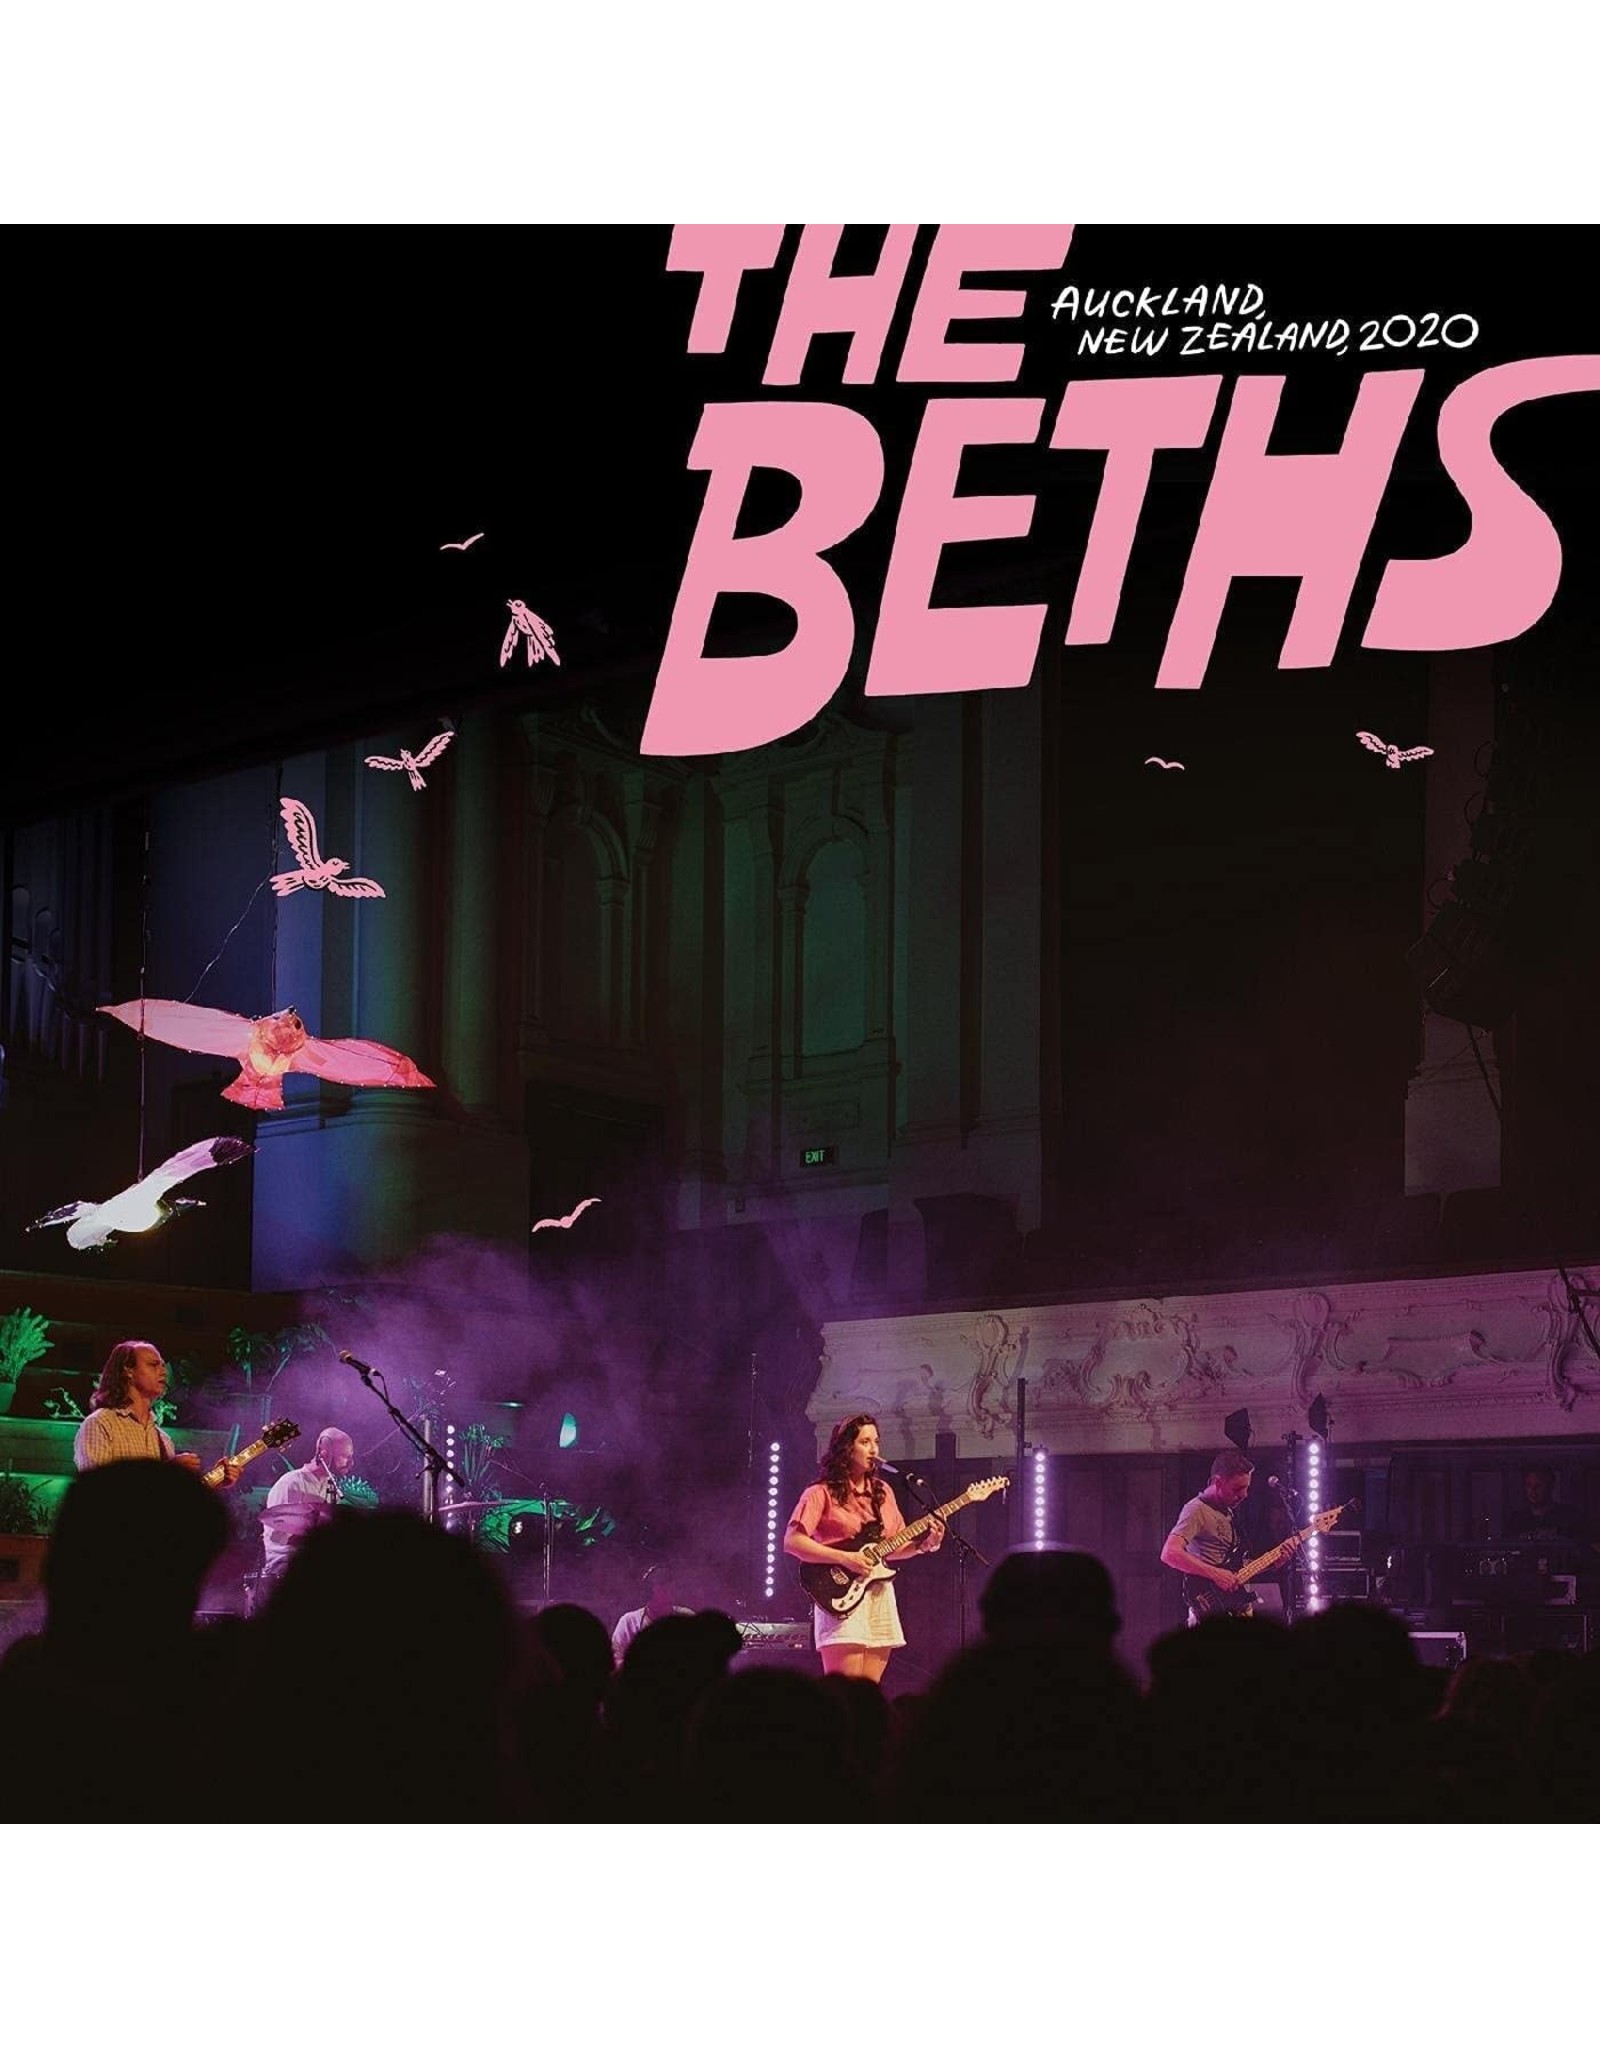 Beths - Auckland, New Zealand 2020 (Orchid Vinyl) 2LP